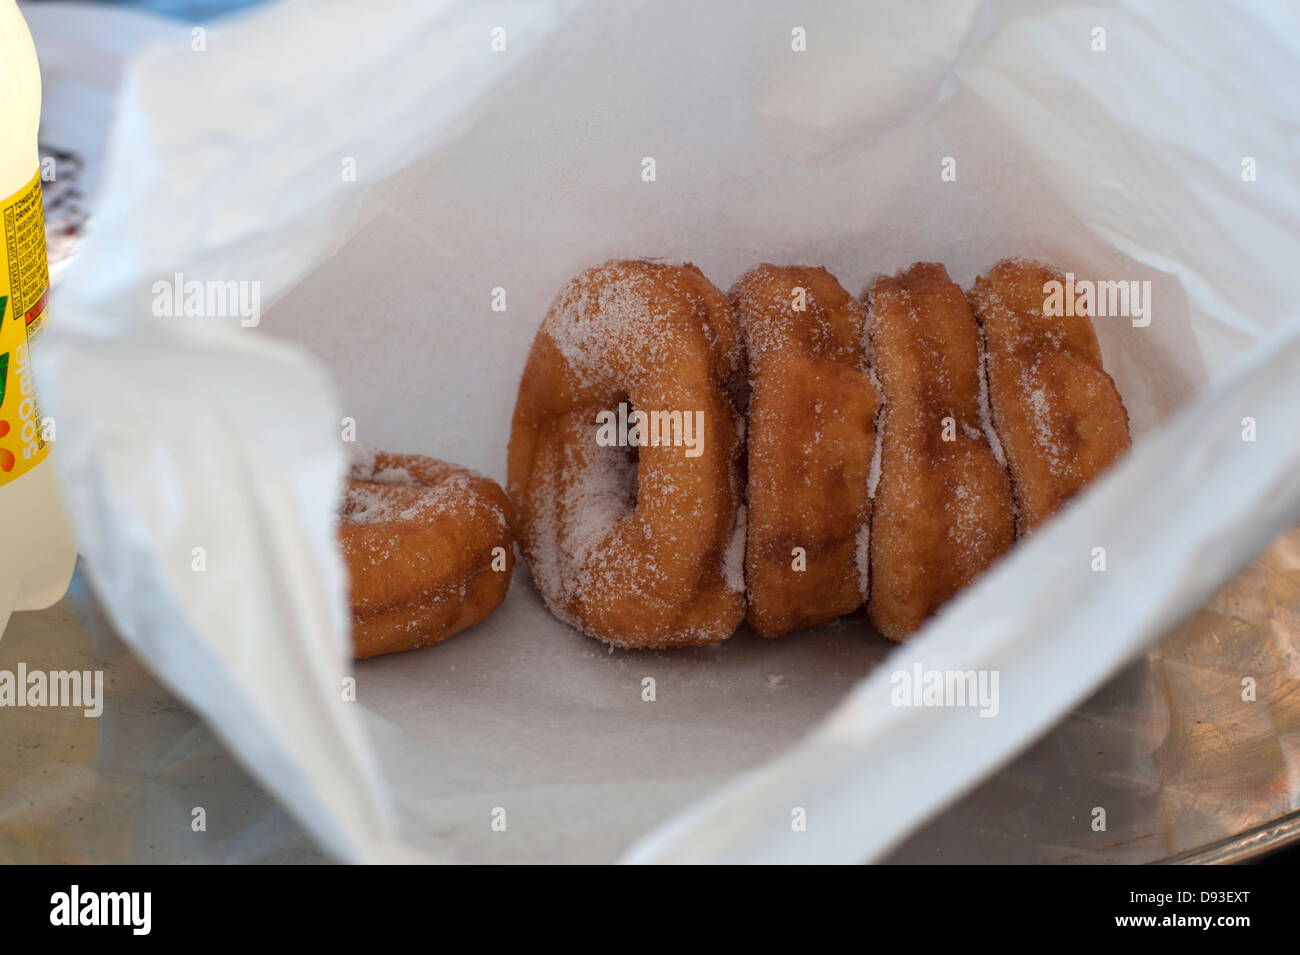 Sugar Donuts in paper bag Stock Photo